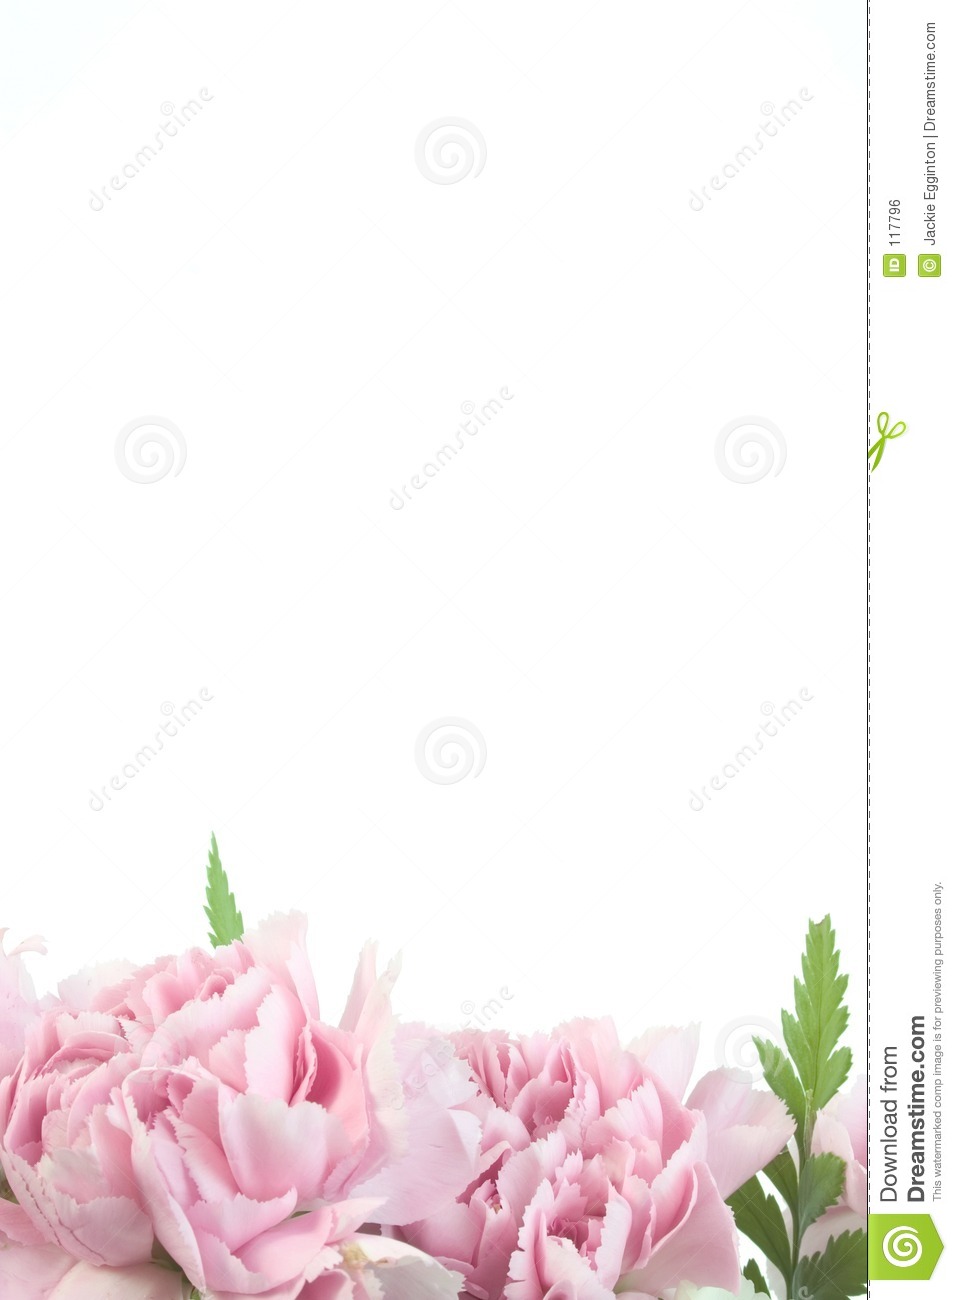 Pink Carnation Border Royalty Free Stock Image   Image  117796